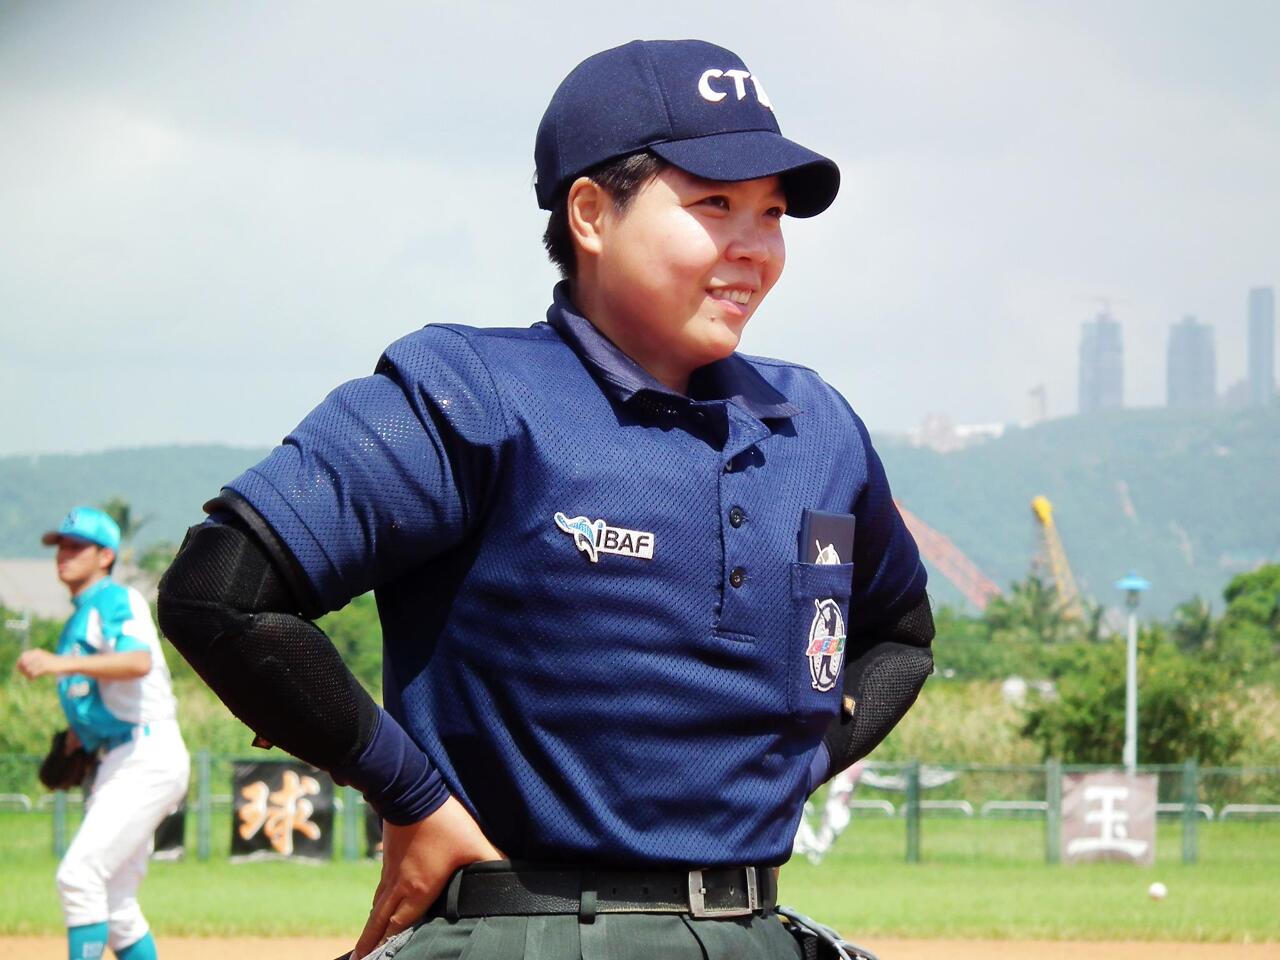 Sophiyah Liu, arbitre de baseball (photo : aimable crédit)